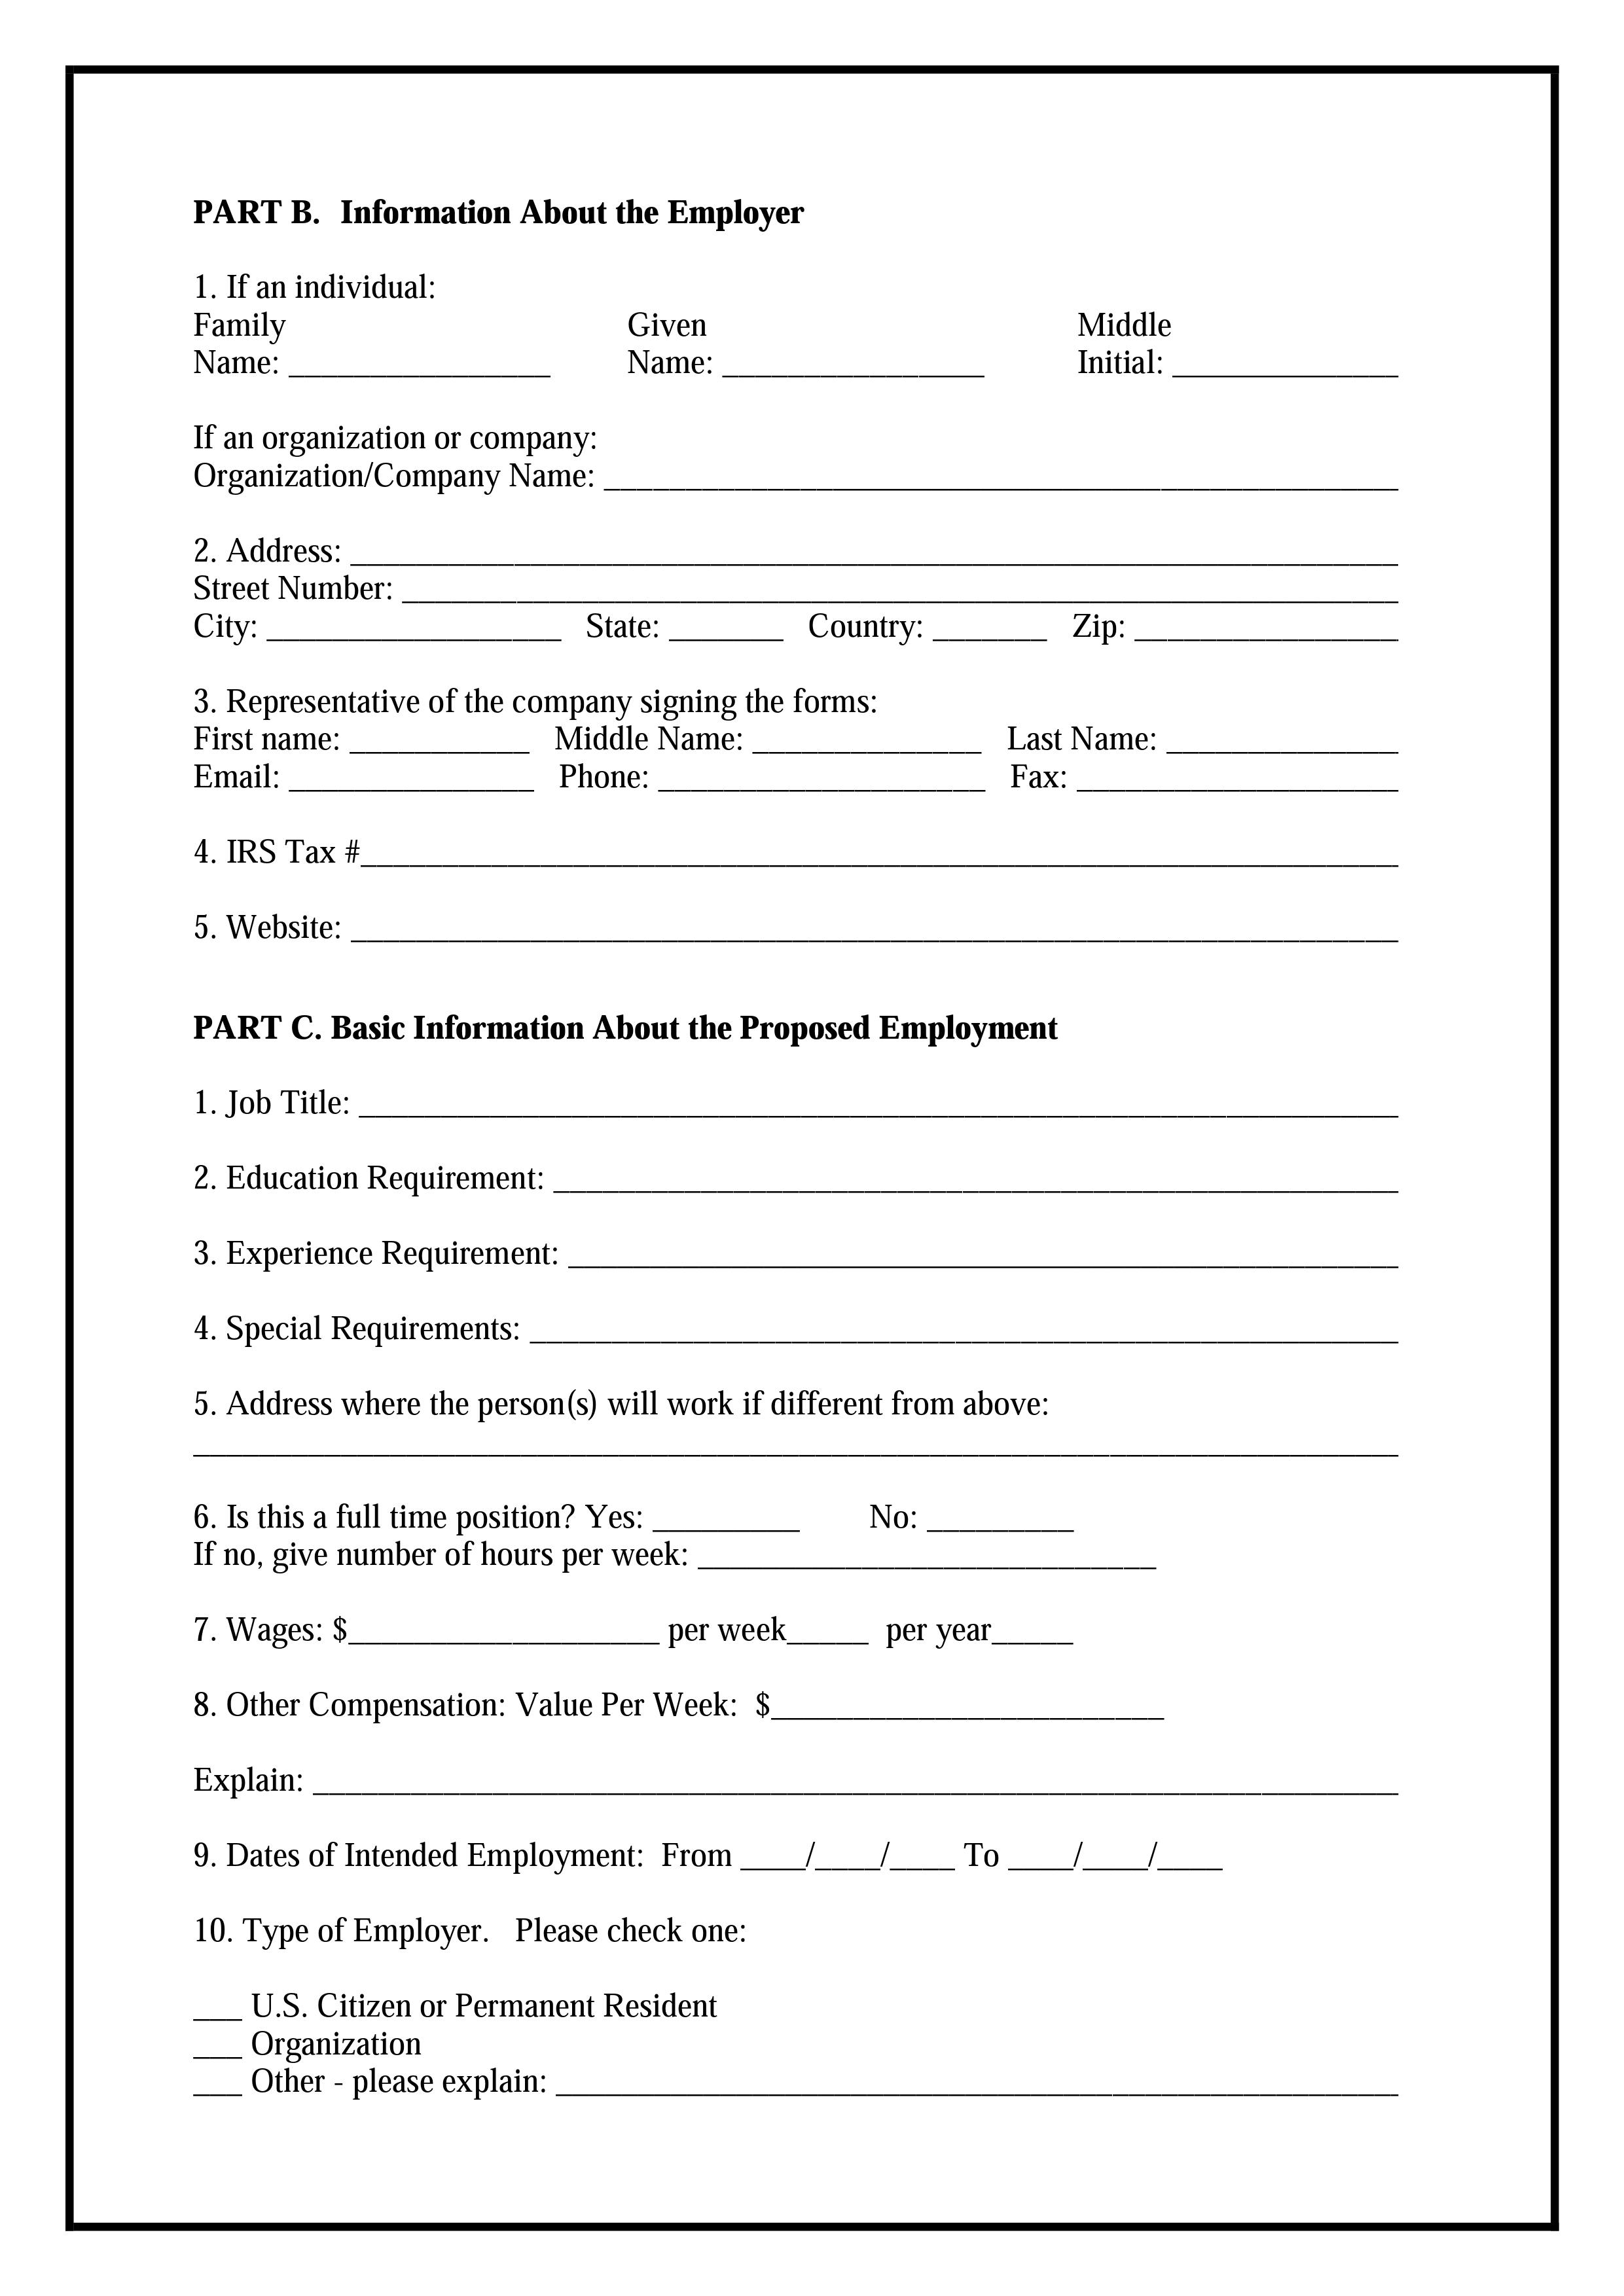 questionnaire for visa application 